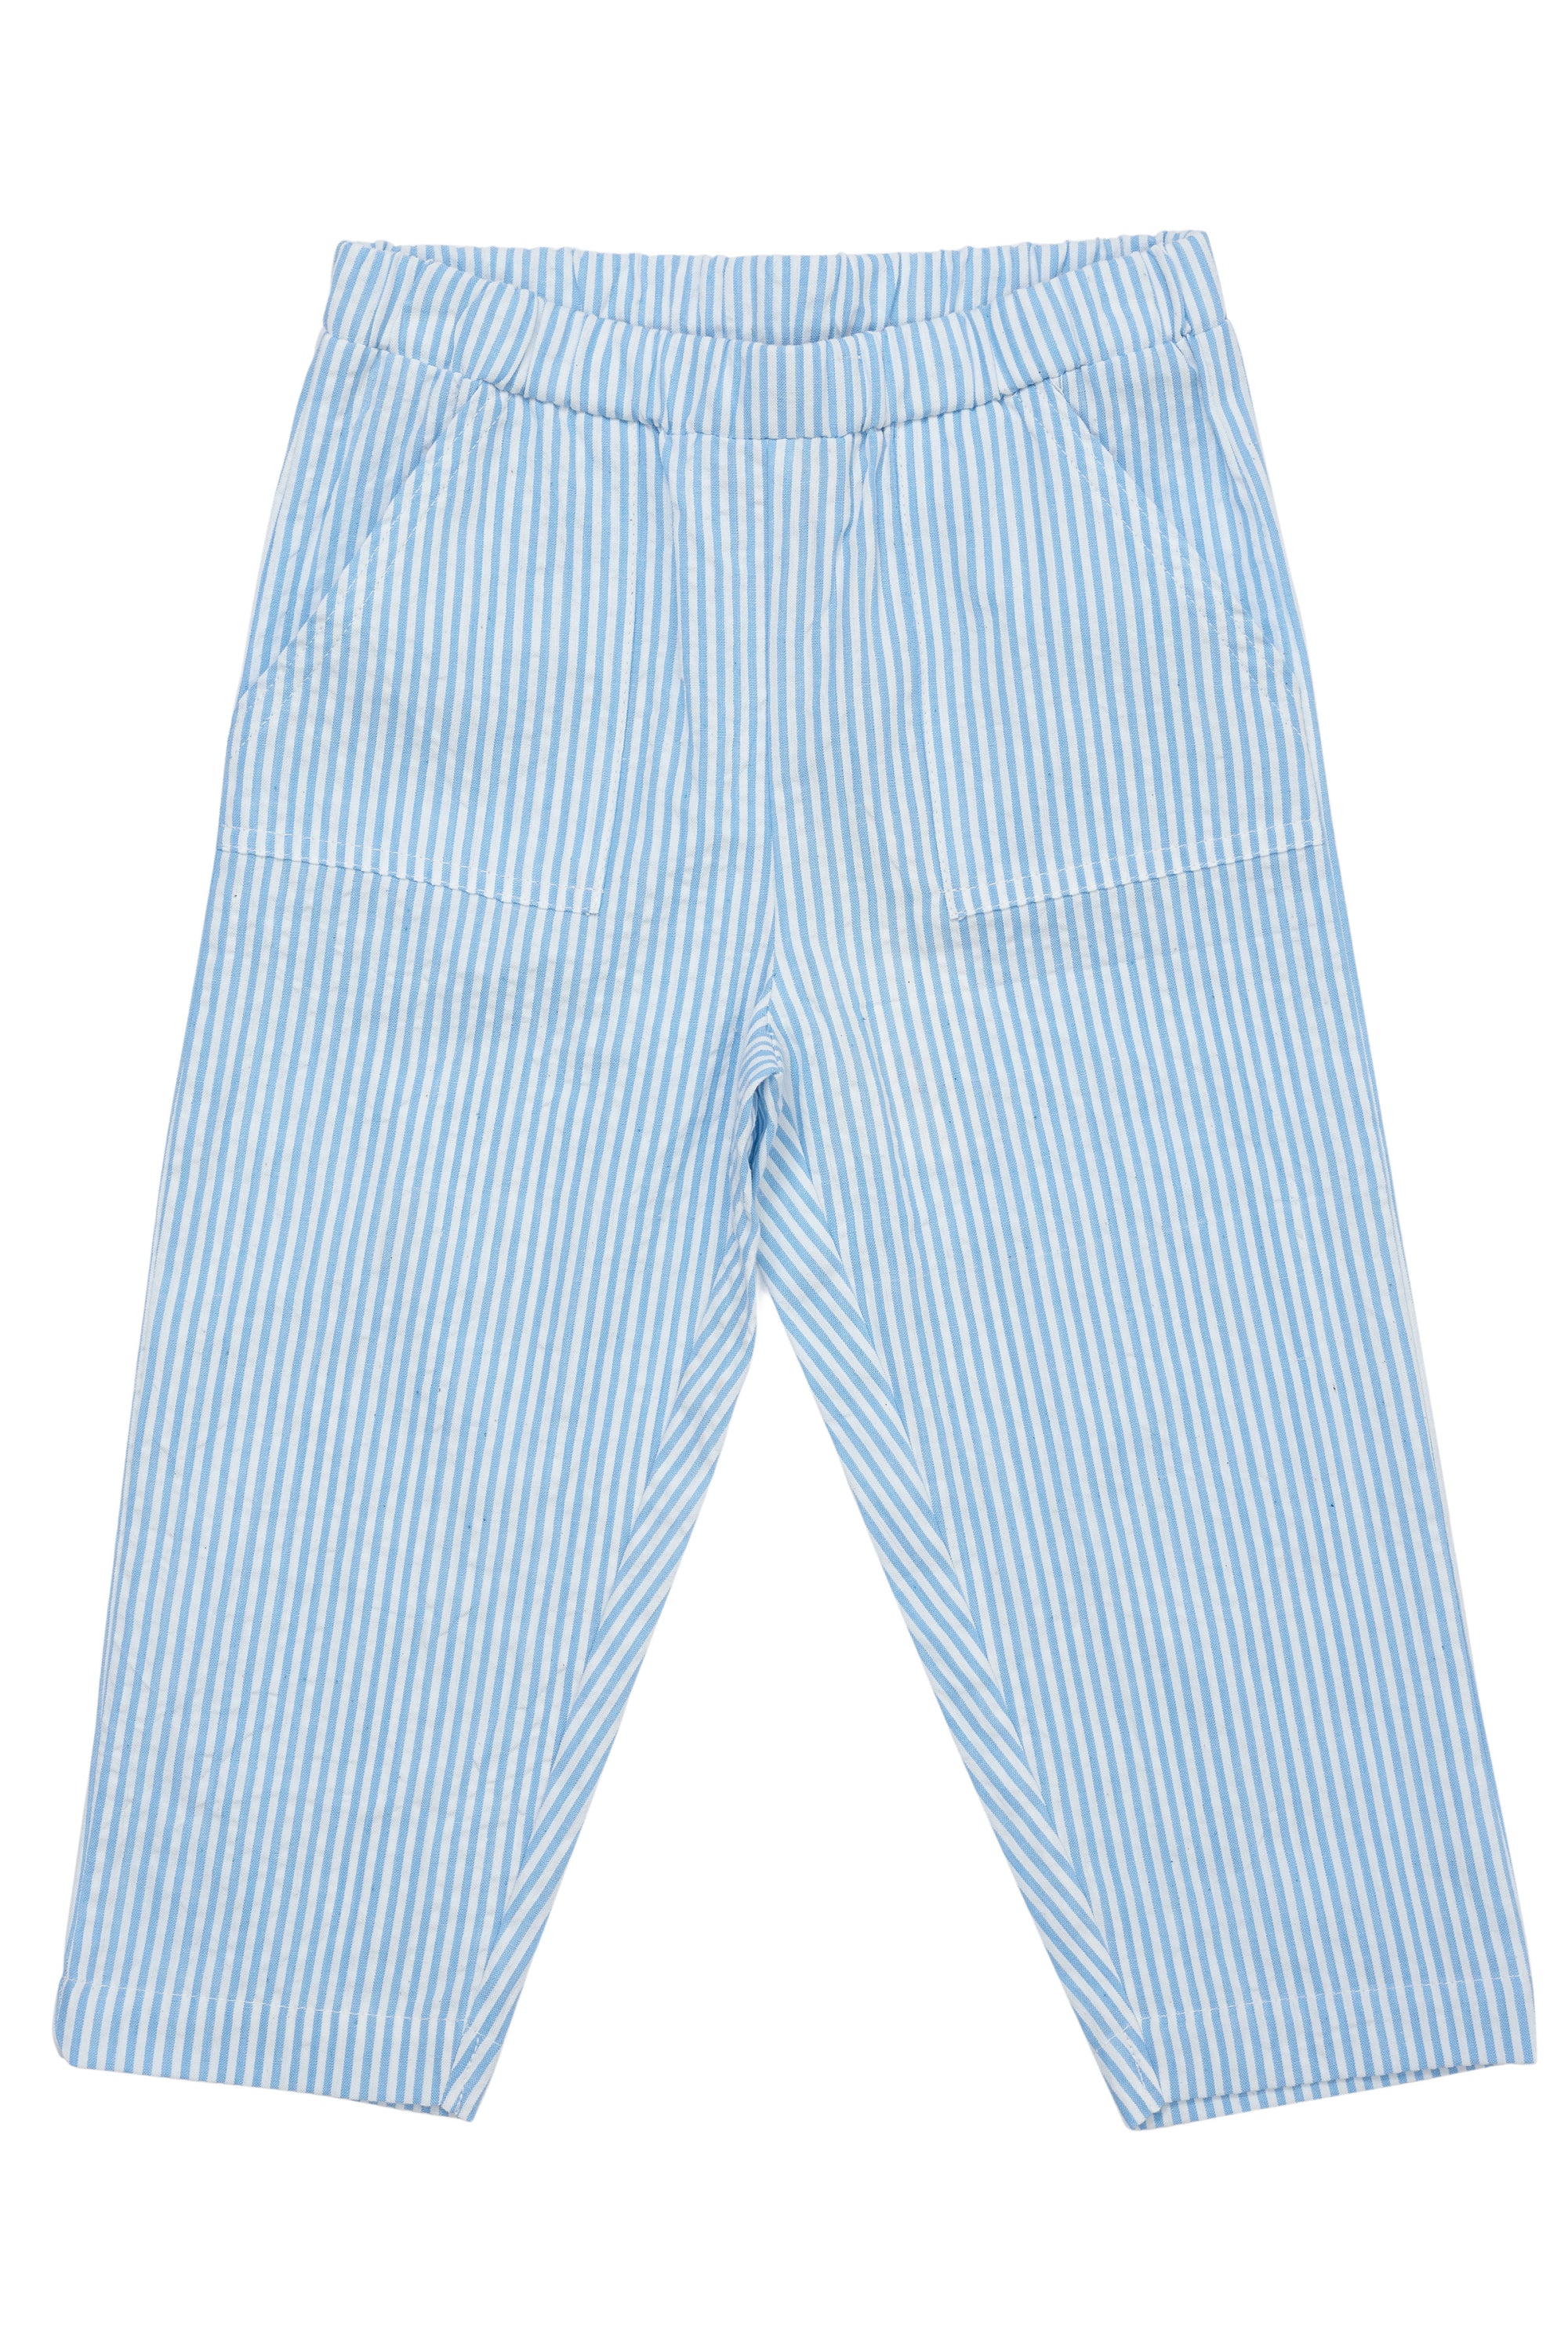 Se Copenhagen Colors Pants - Sky Blue/Cream stripe - 80 cm hos Luxbaby.dk